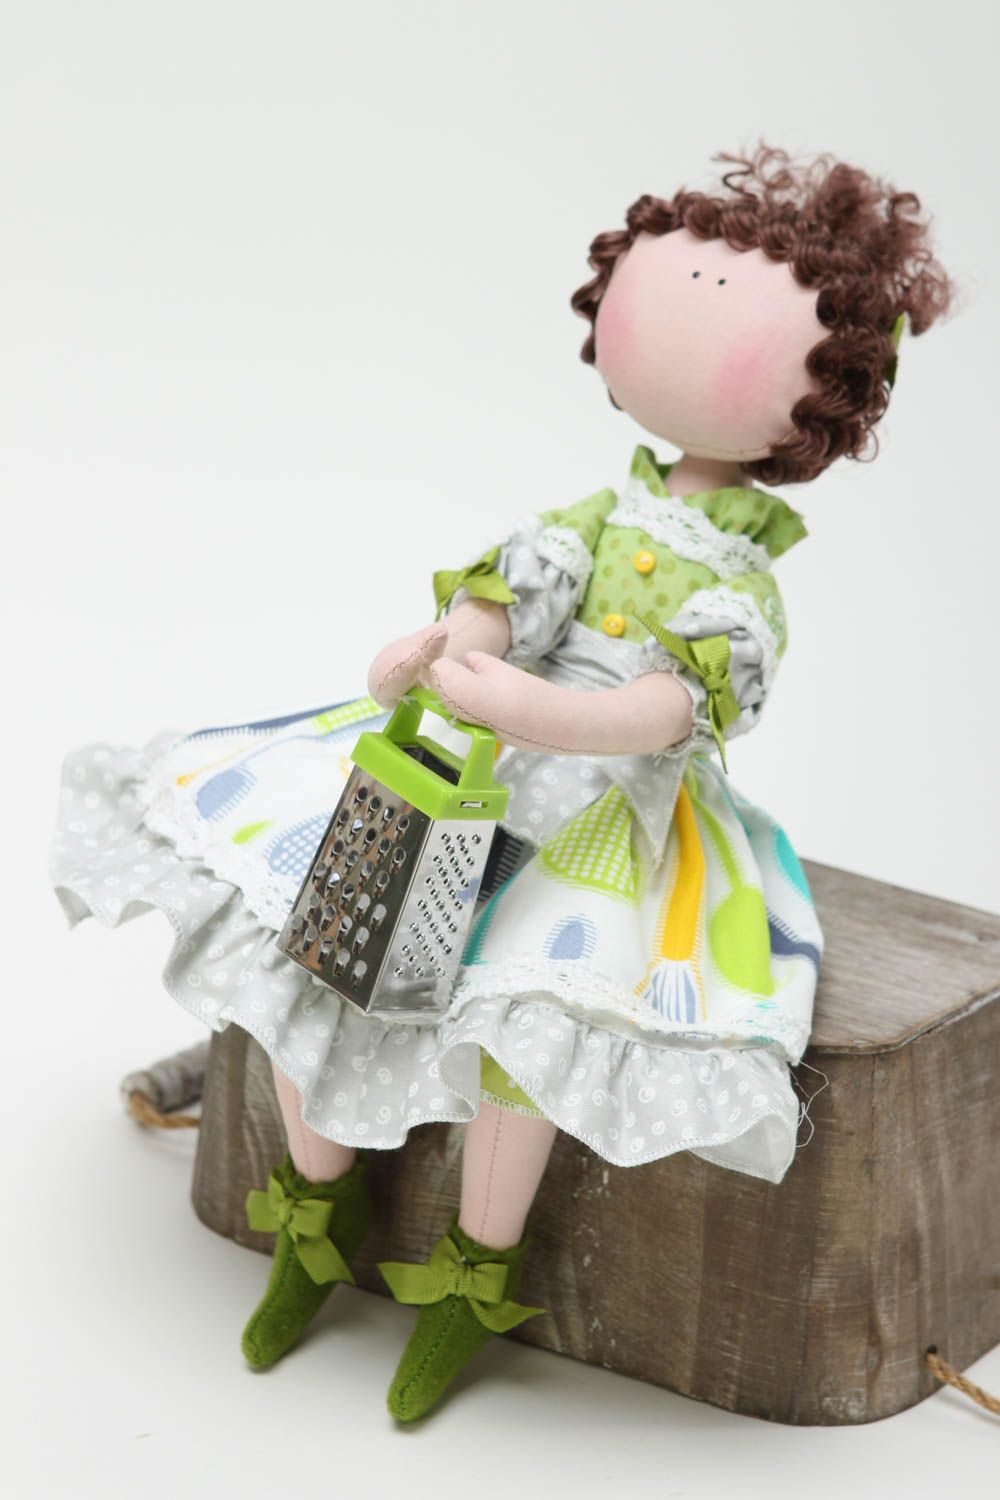 Beautiful handmadr rag doll decorative soft toy gift ideas decorative use only photo 2